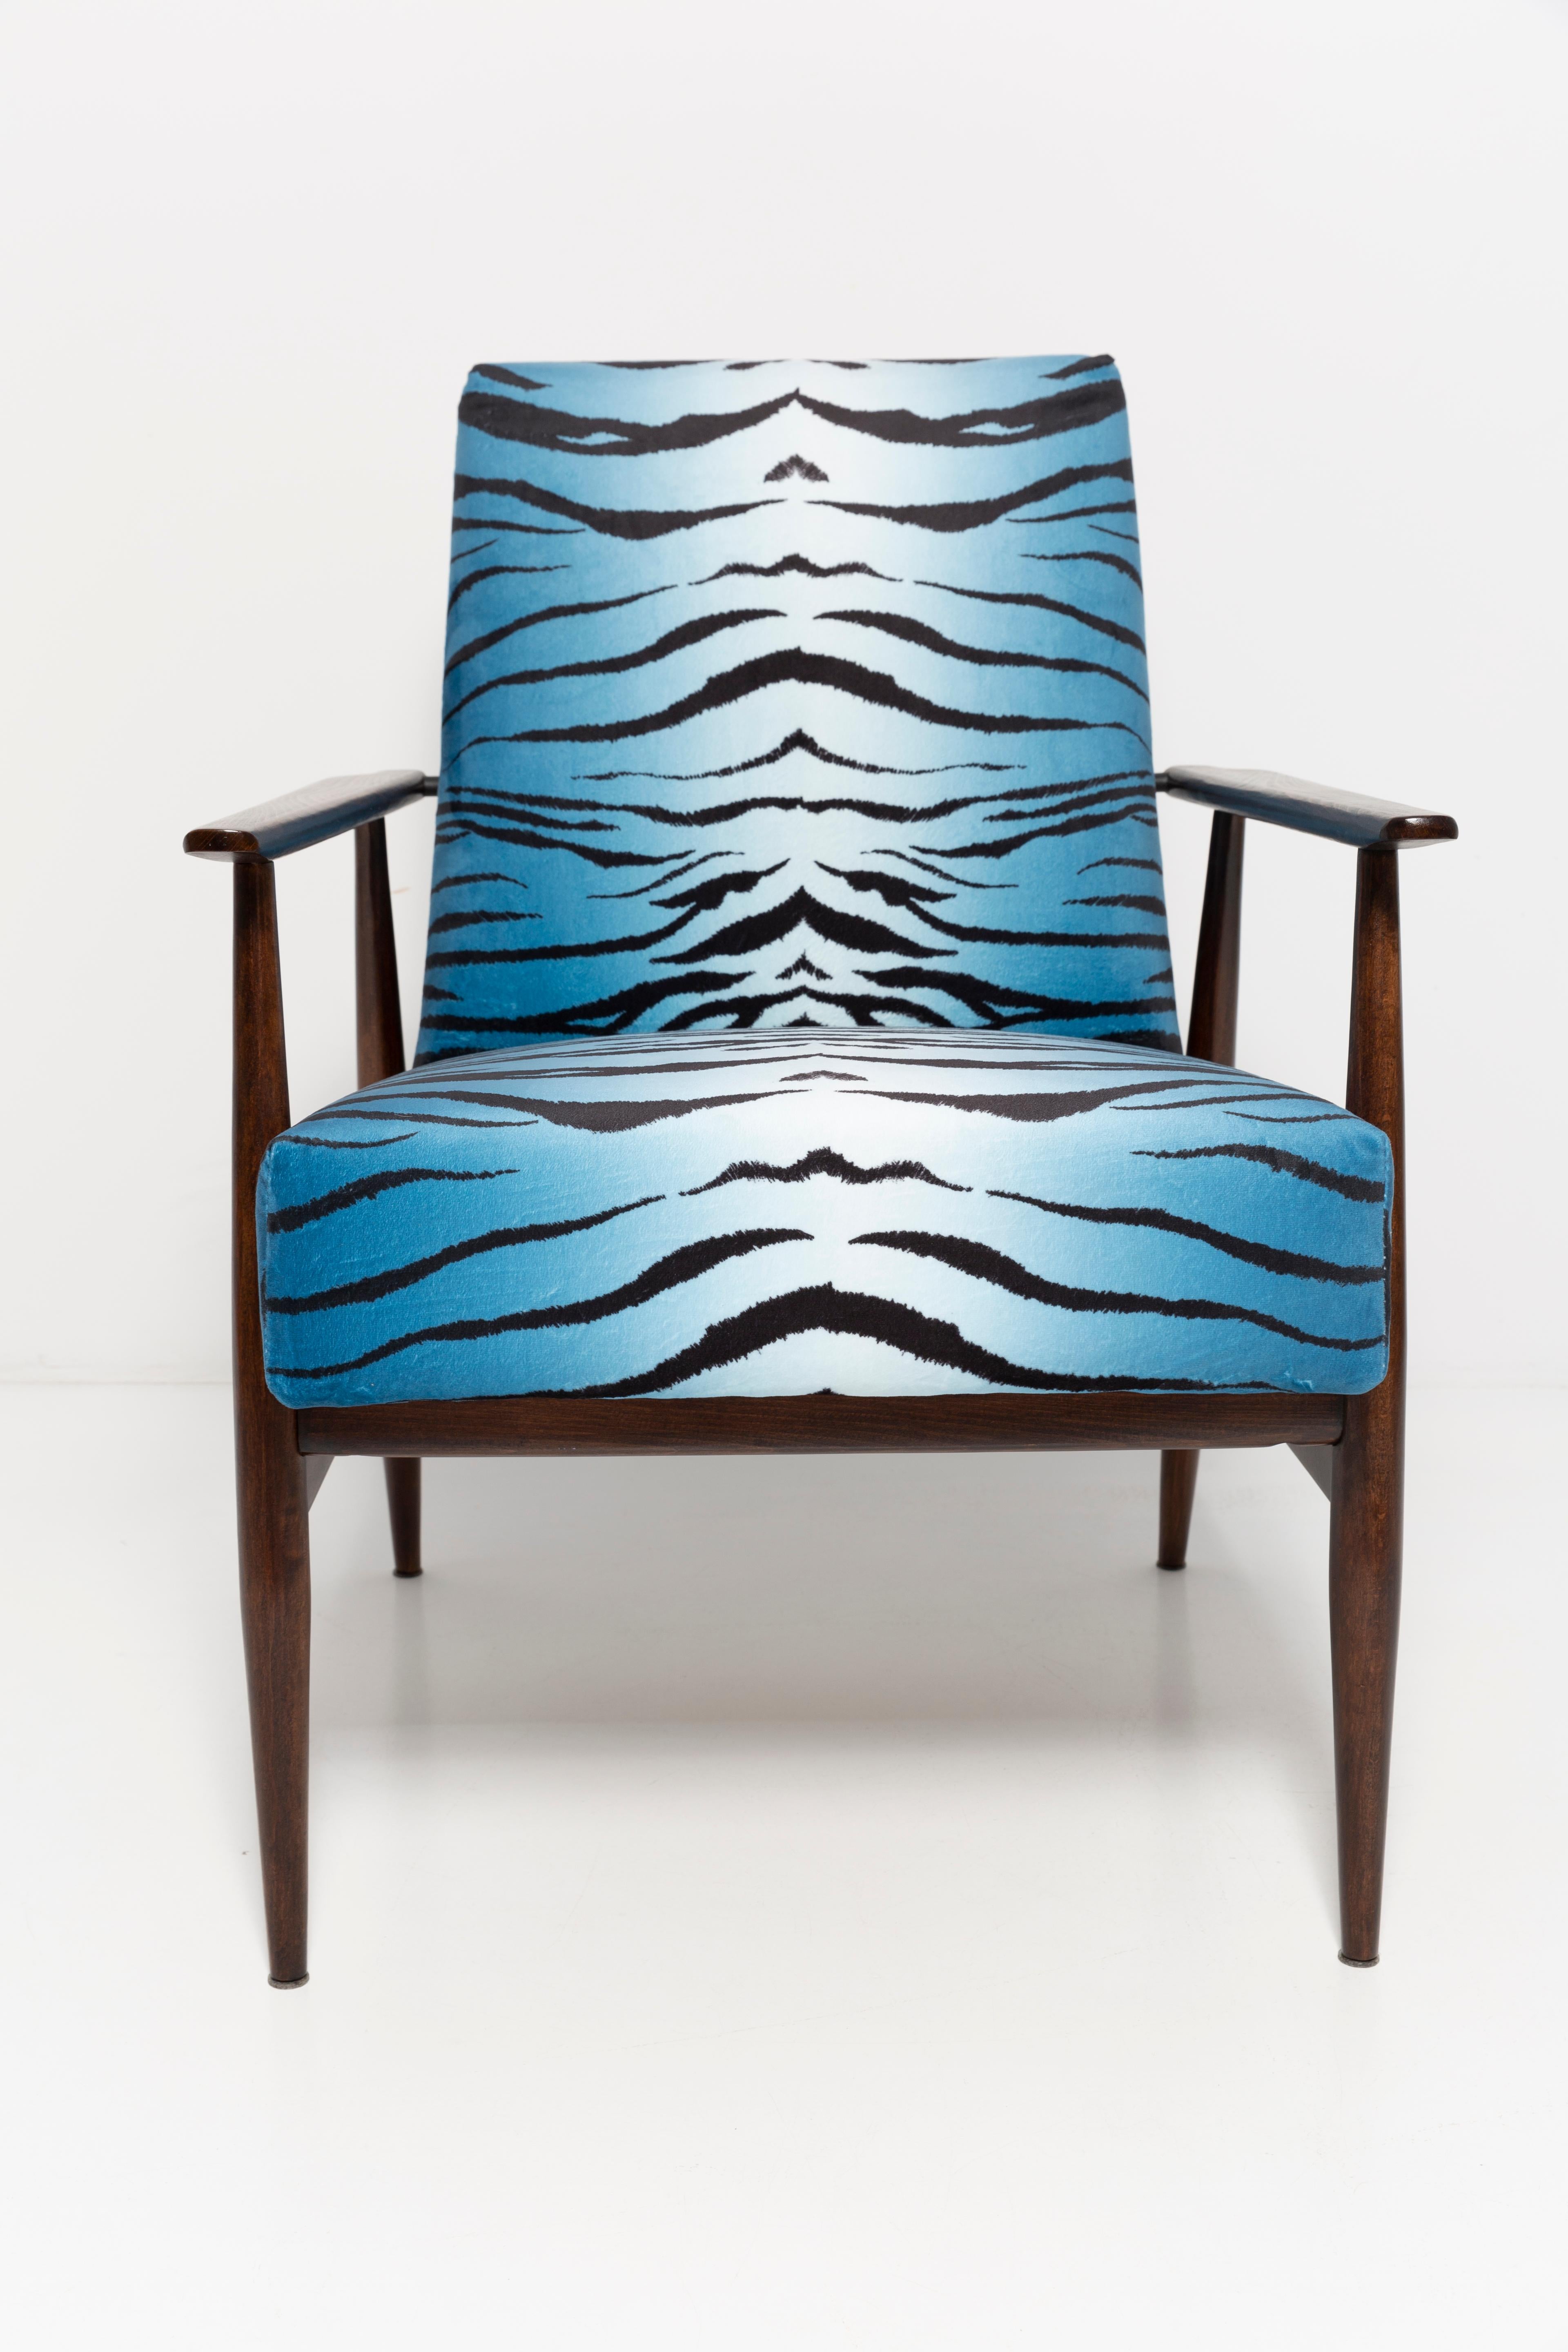 Hand-Crafted Mid-Century Blue Zebra Print Velvet Dante Armchair, H. Lis, 1960s For Sale